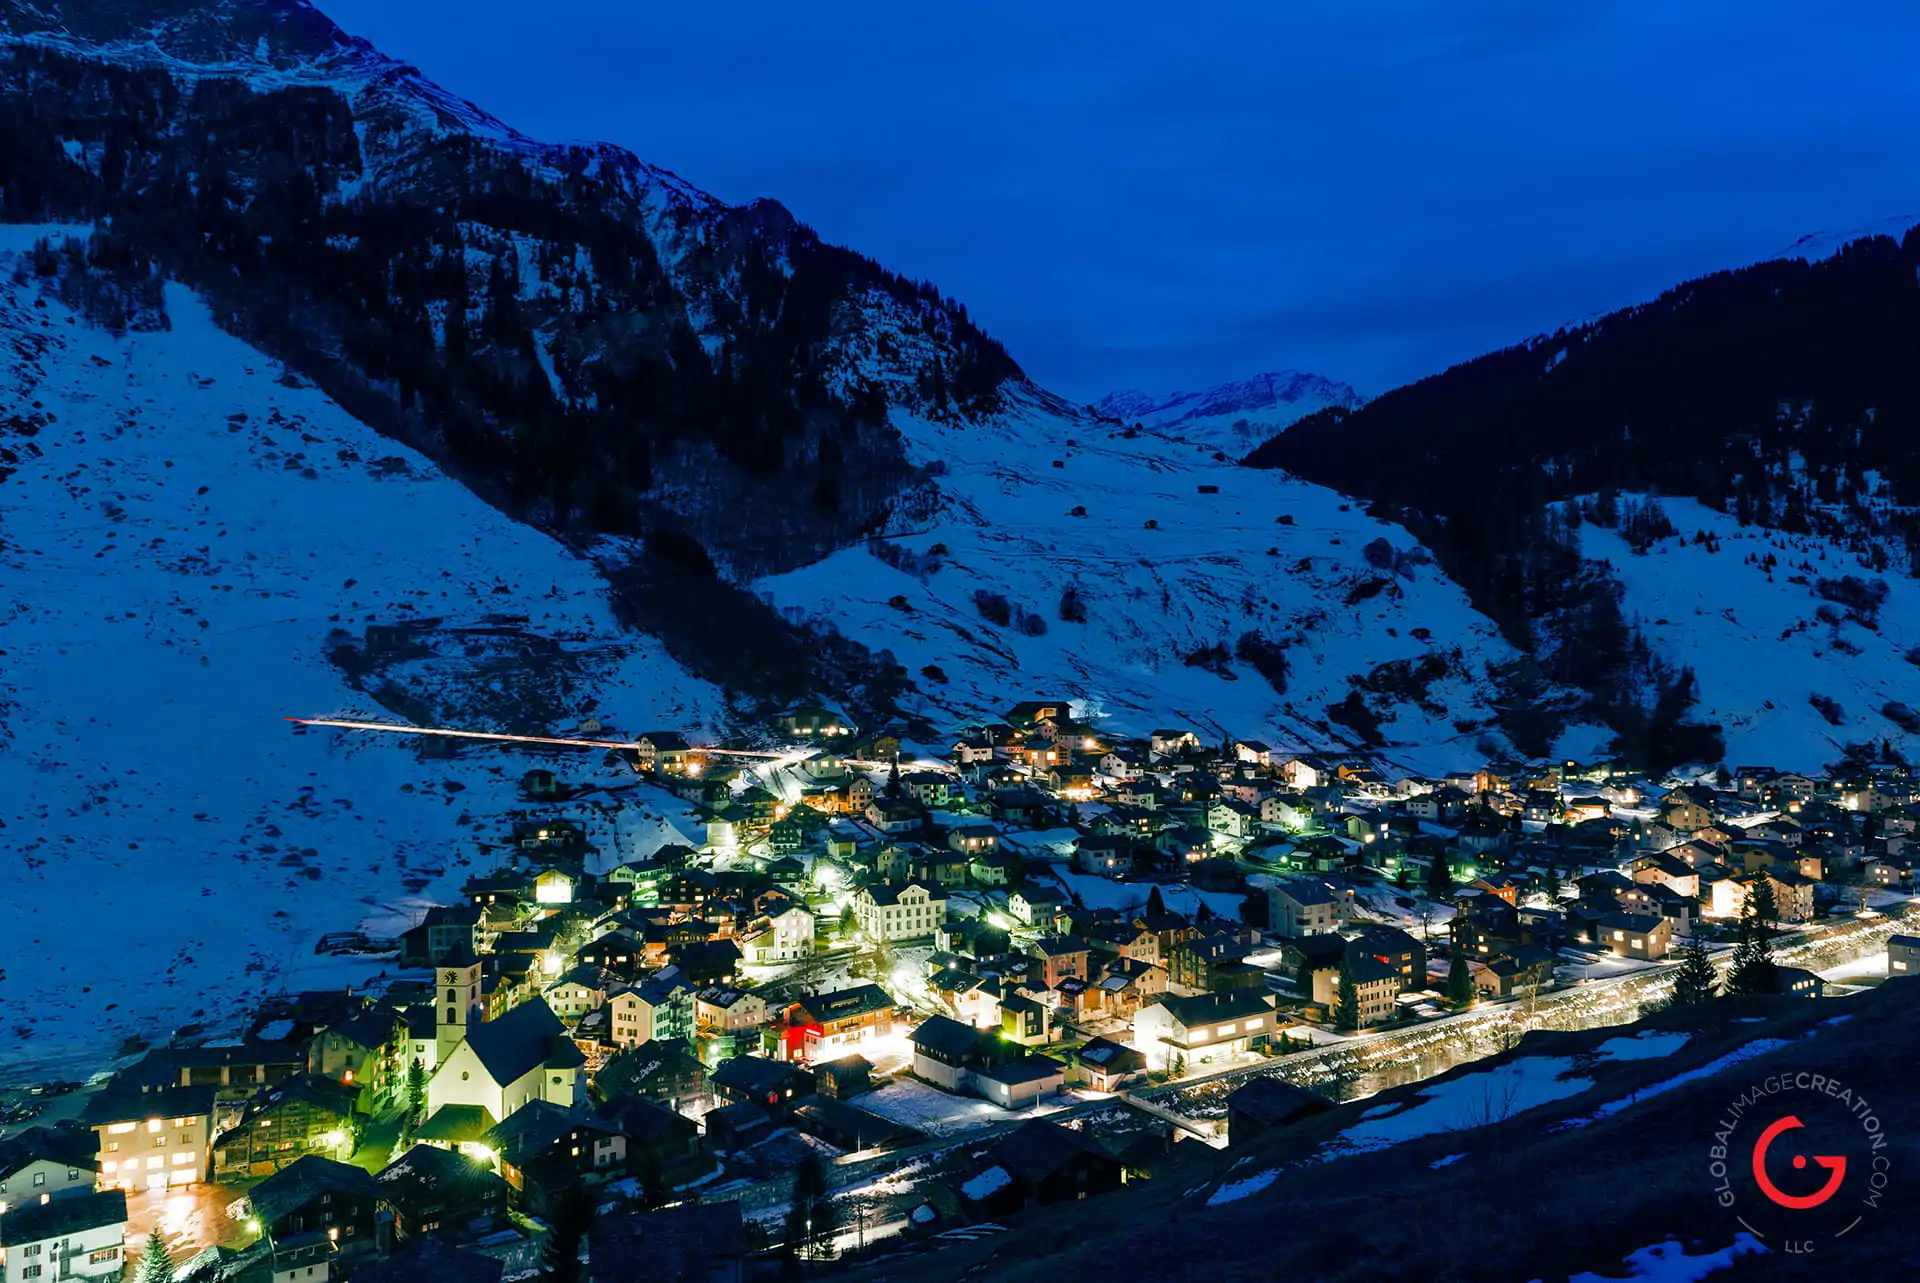 Evening Landscape in the Winter, Vals Switzerland - Travel Photographer